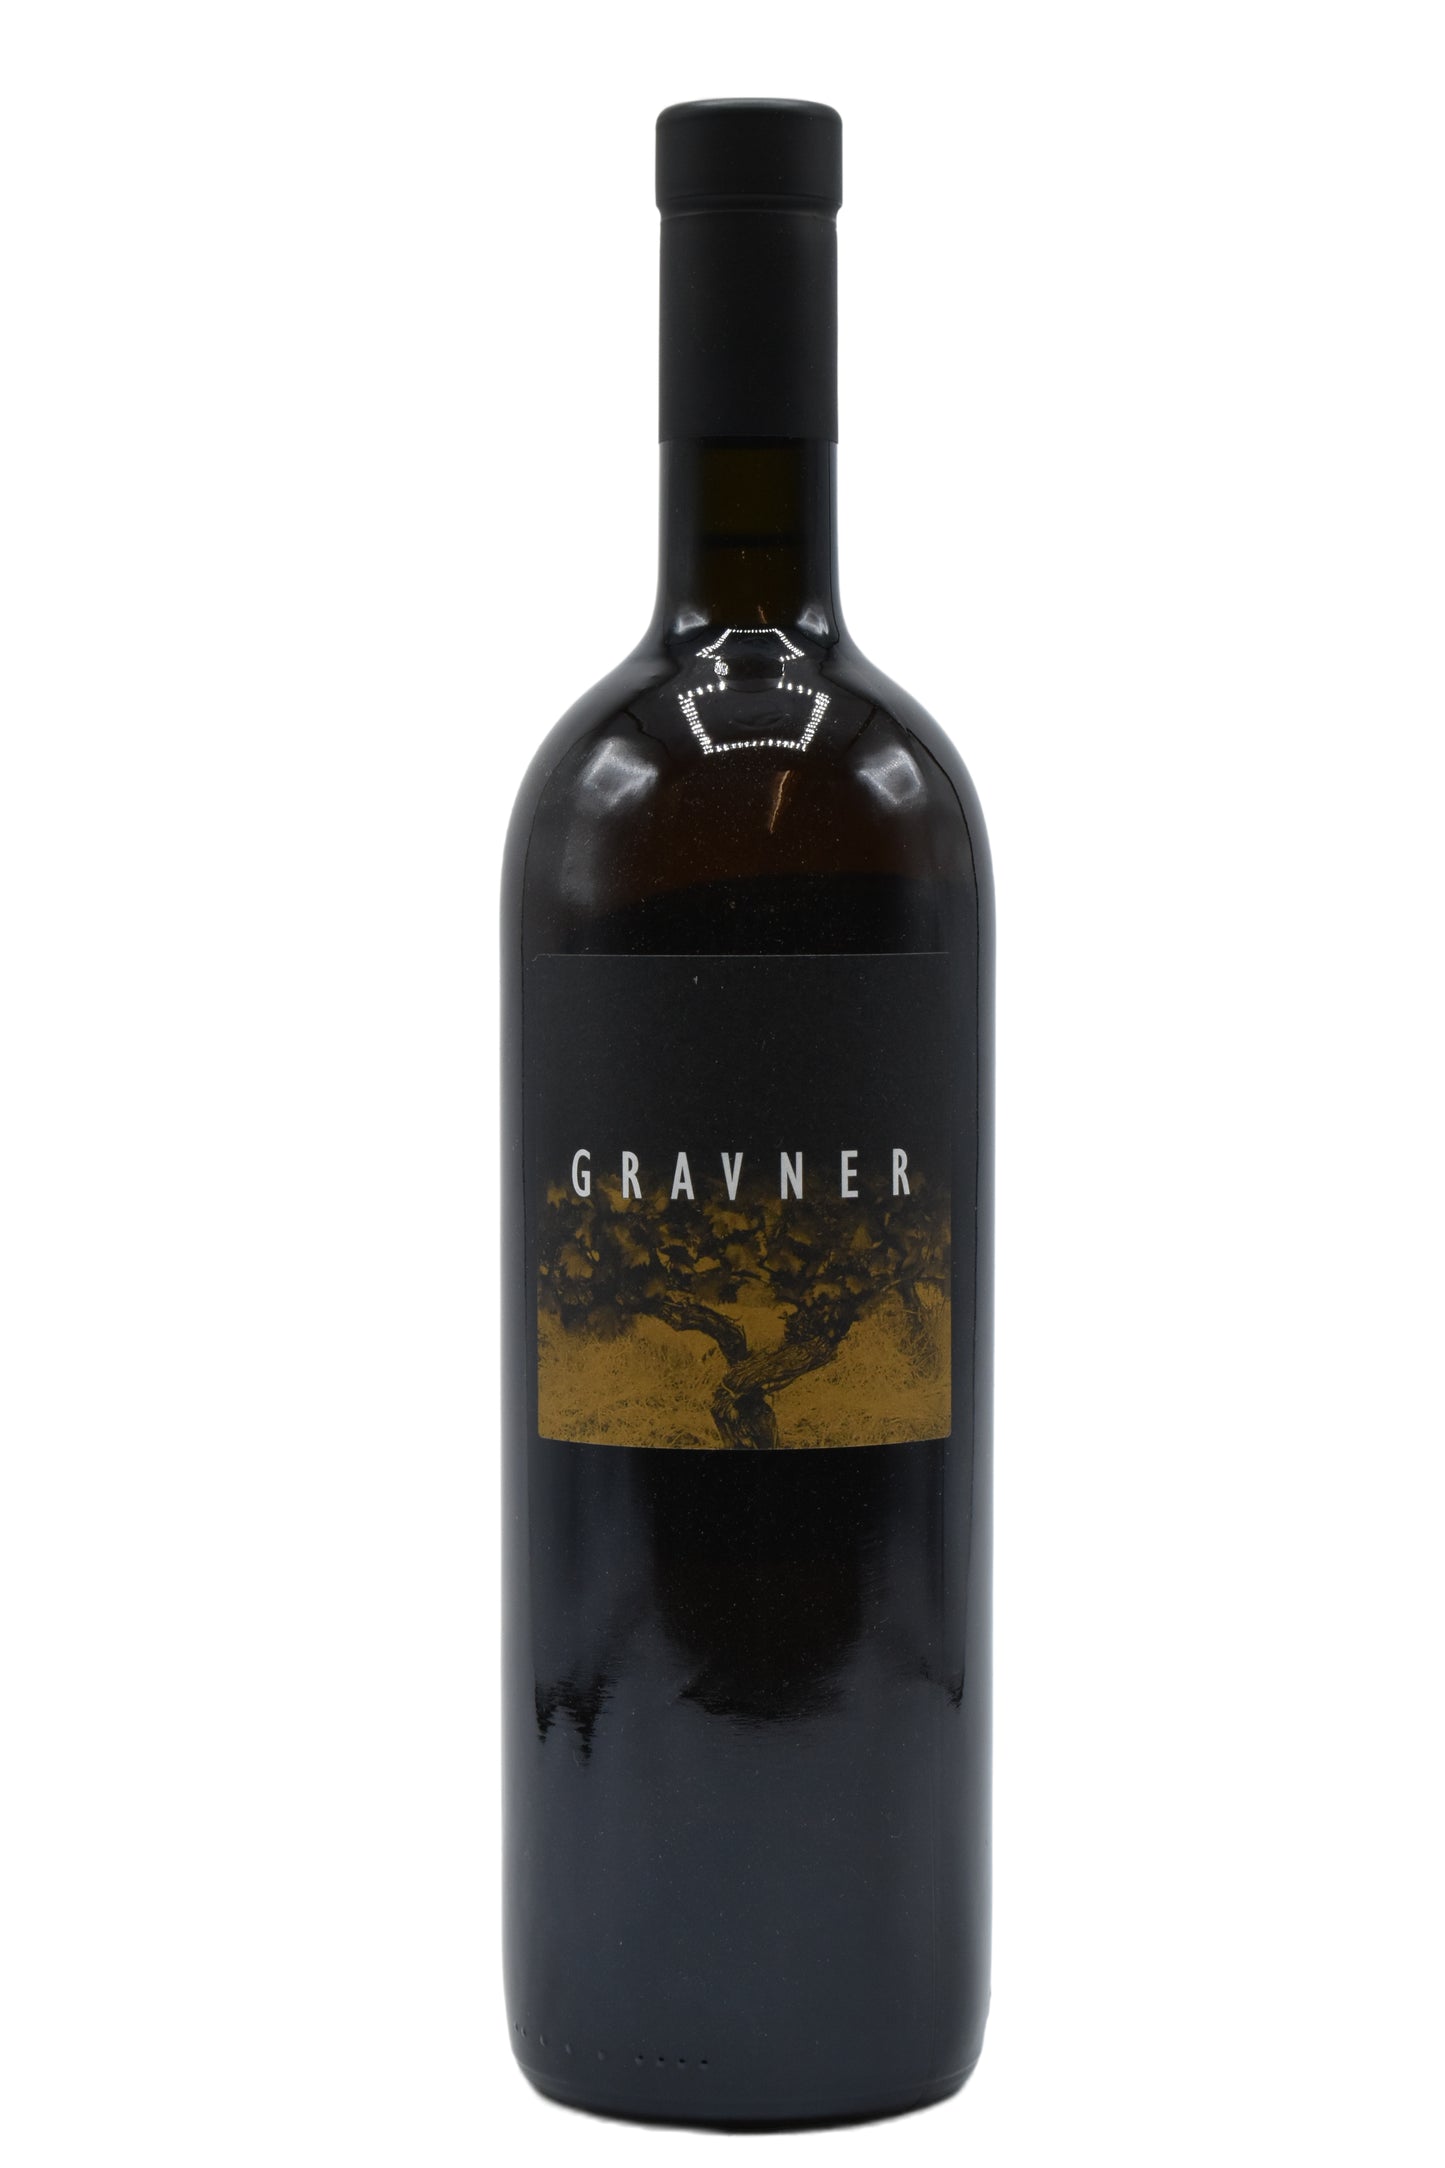 2013 Gravner, Ribolla Gialla 750ml - Walker Wine Co.